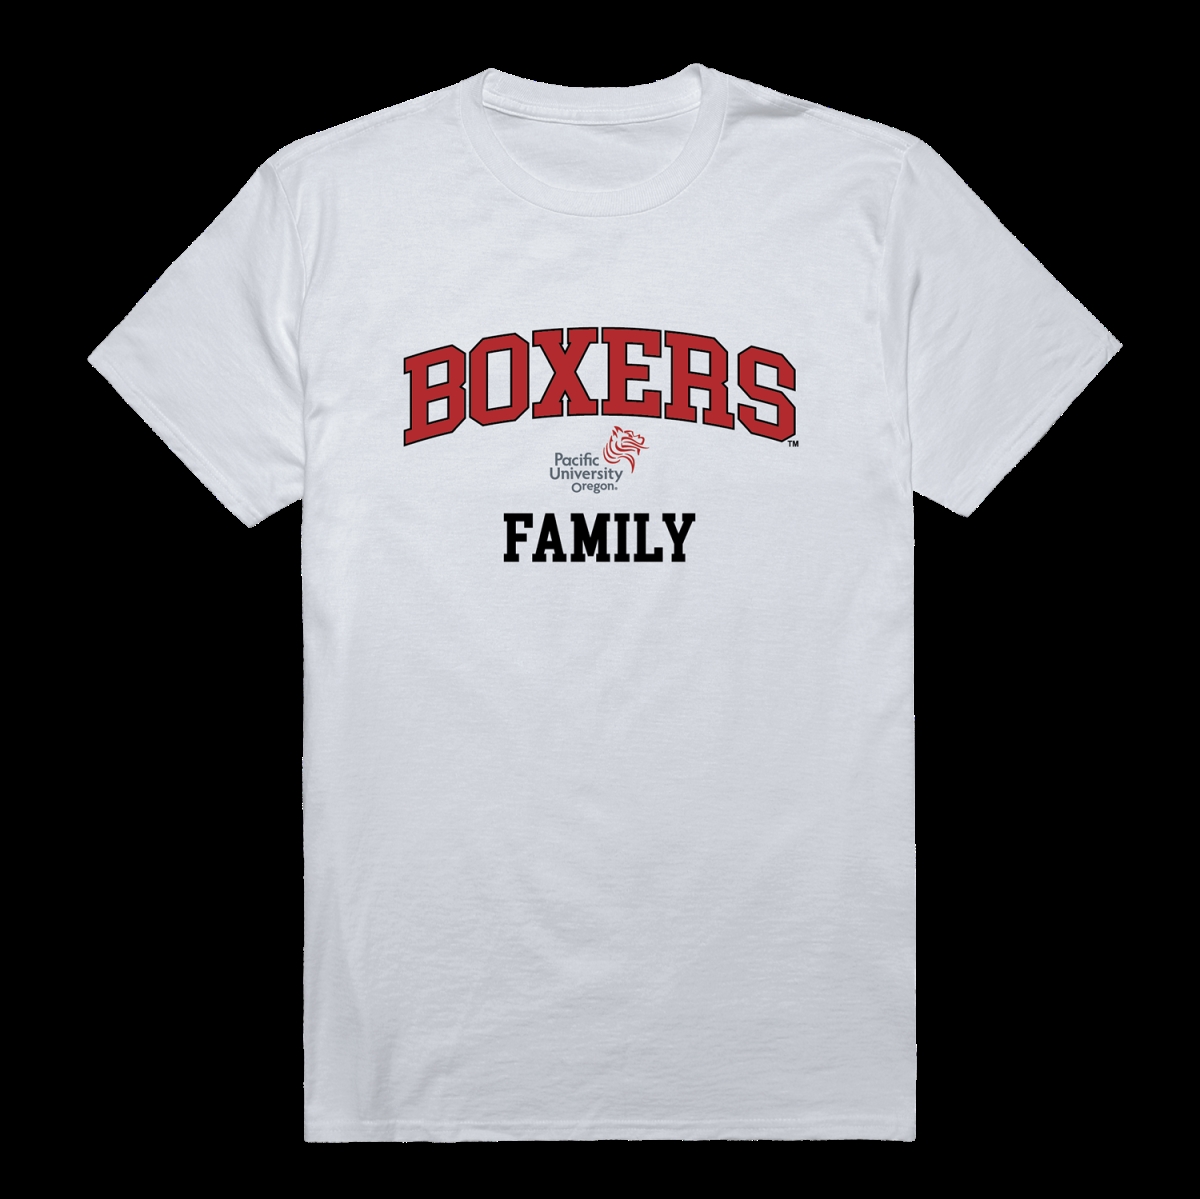 W Republic 571-567-WHT-04 Pacific University Boxers Family T-Shirt&#44; White - Extra Large